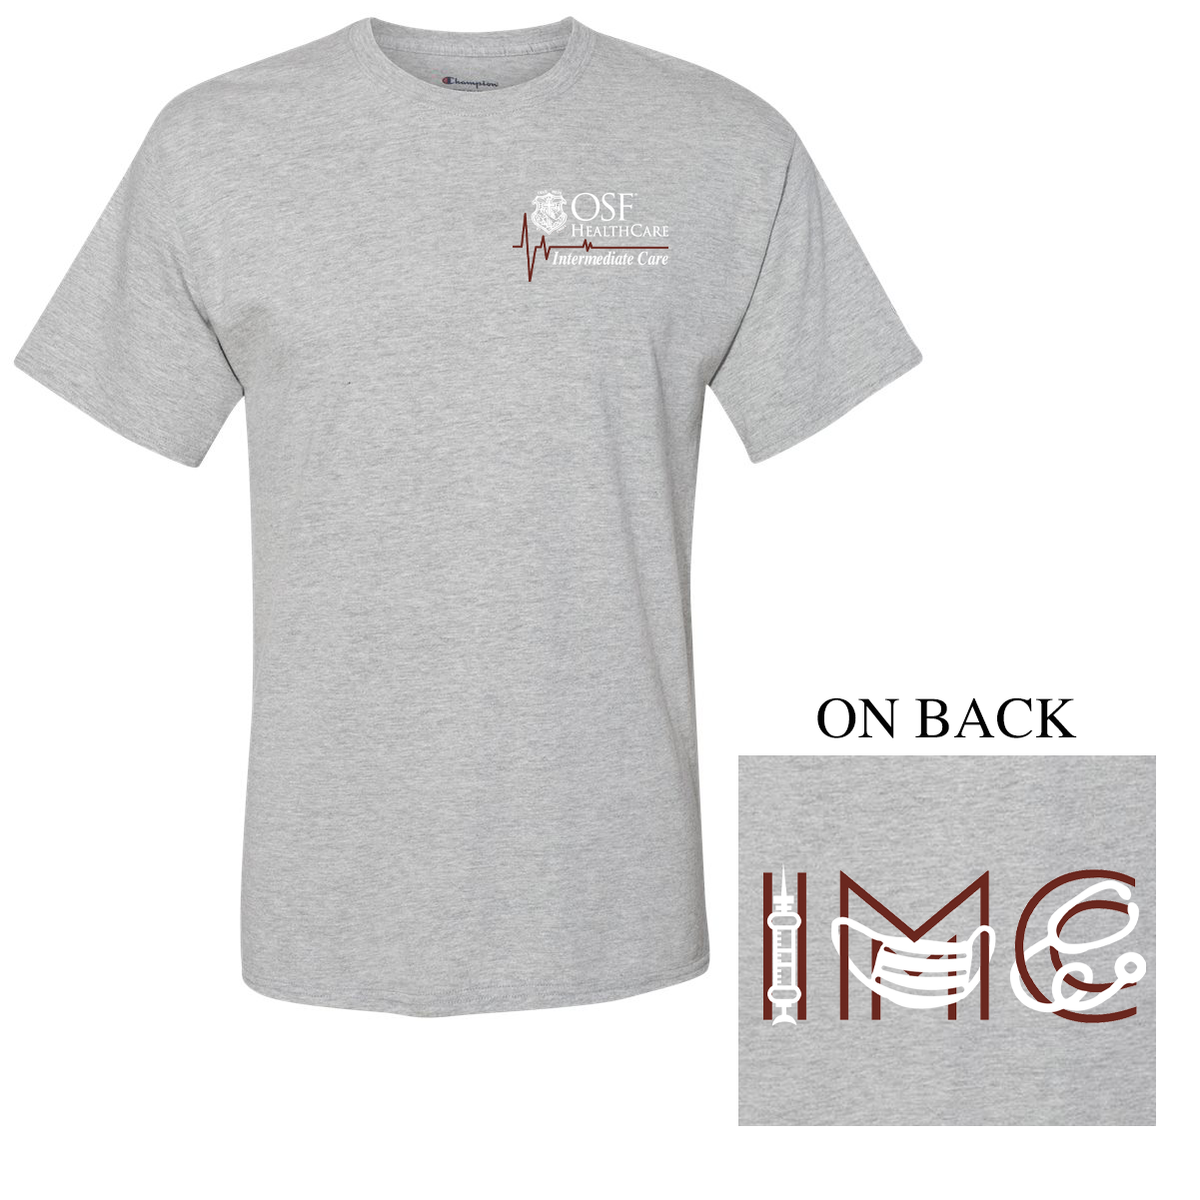 OSF Healthcare IMCU Champion Short Sleeve T-Shirt